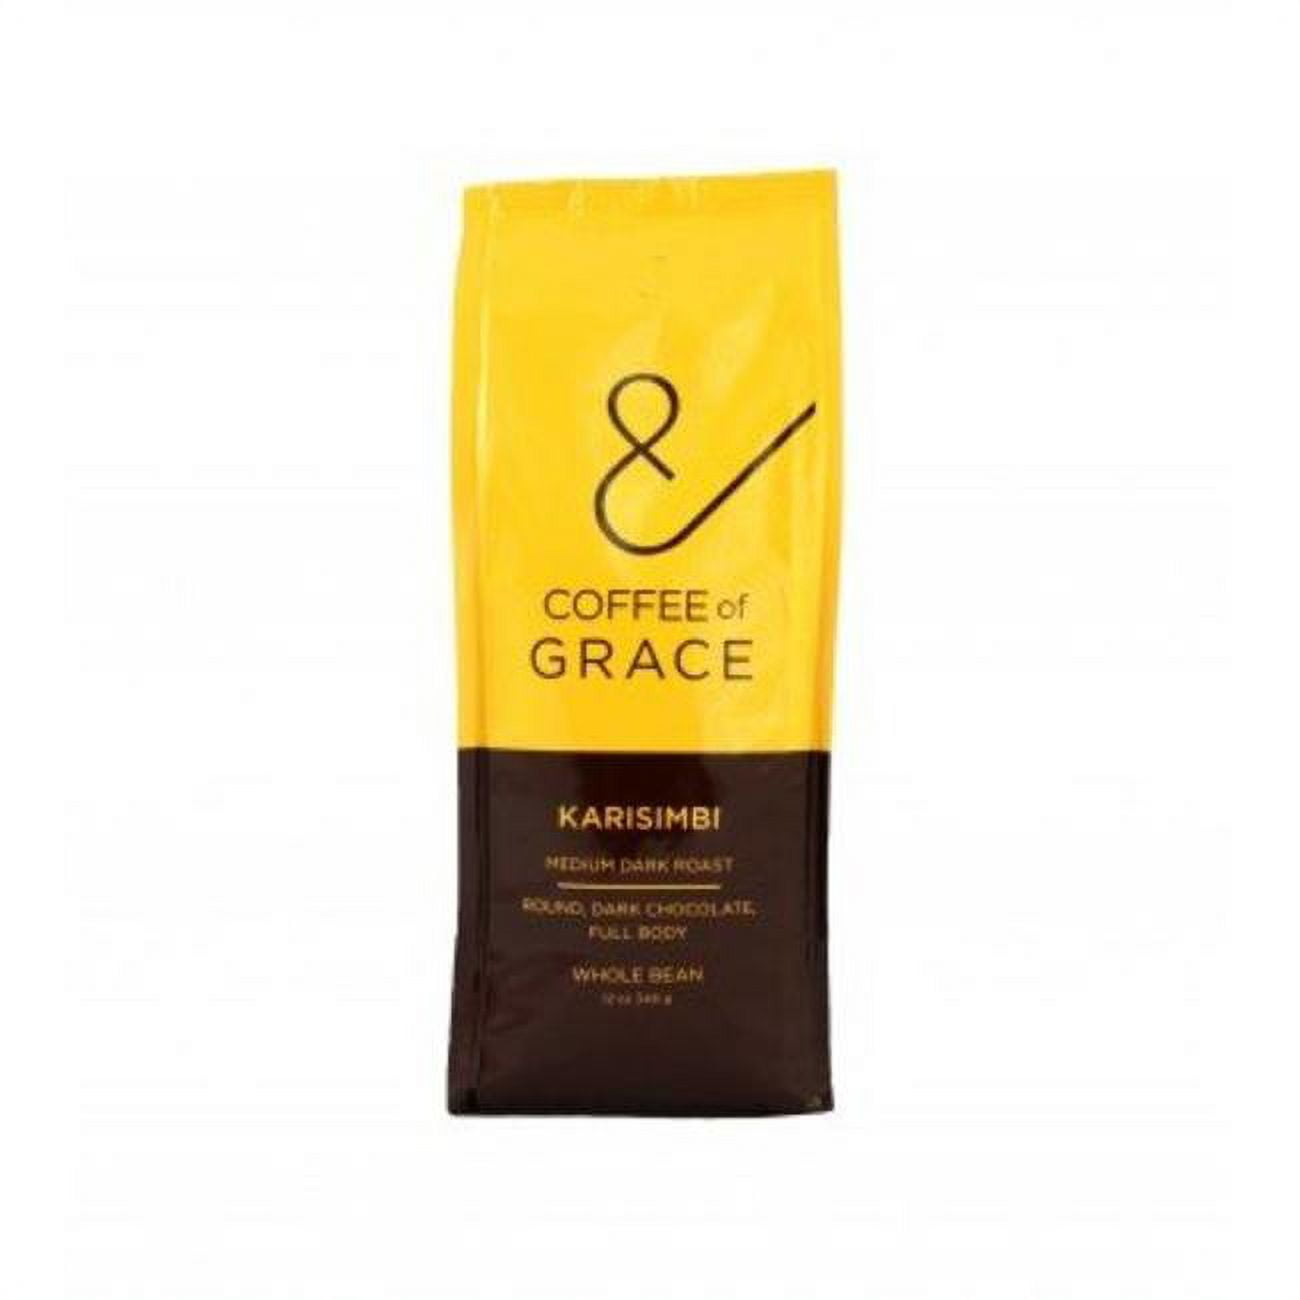 Picture of Coffee of Grace 11 12 oz Karisimbi Medium Dark Roast Coffee